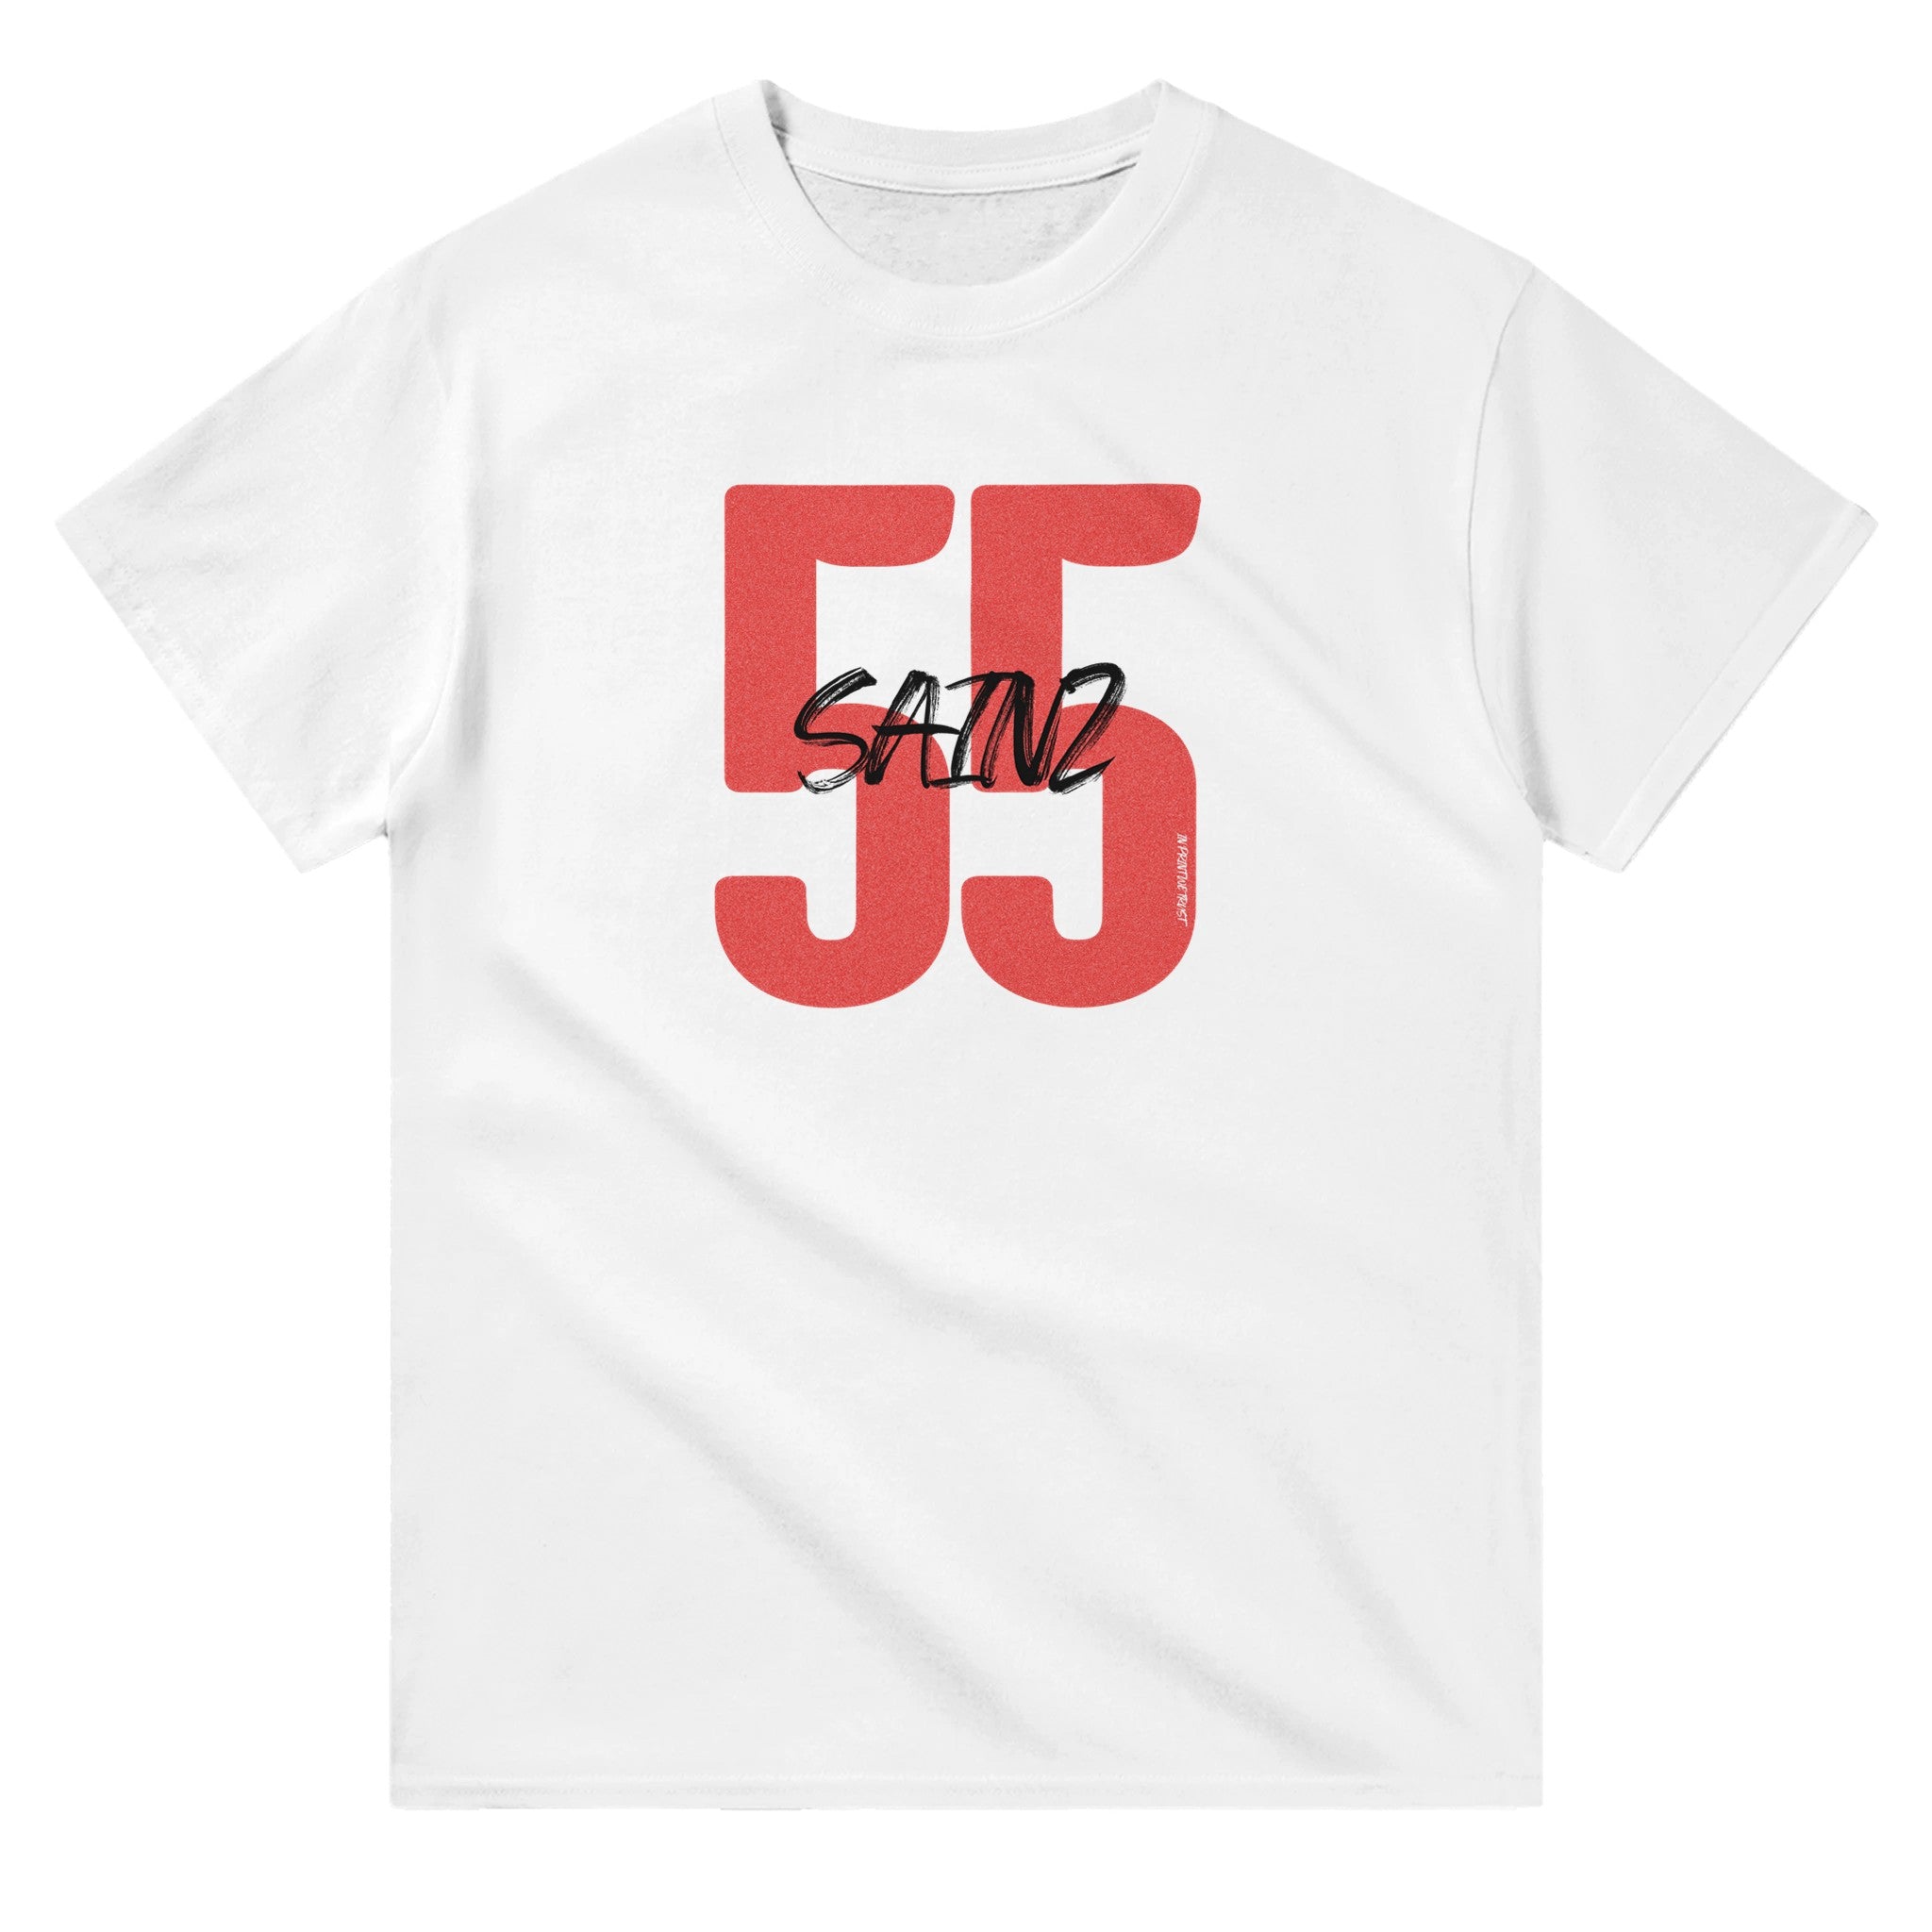 'Sainz 55' classic tee - In Print We Trust